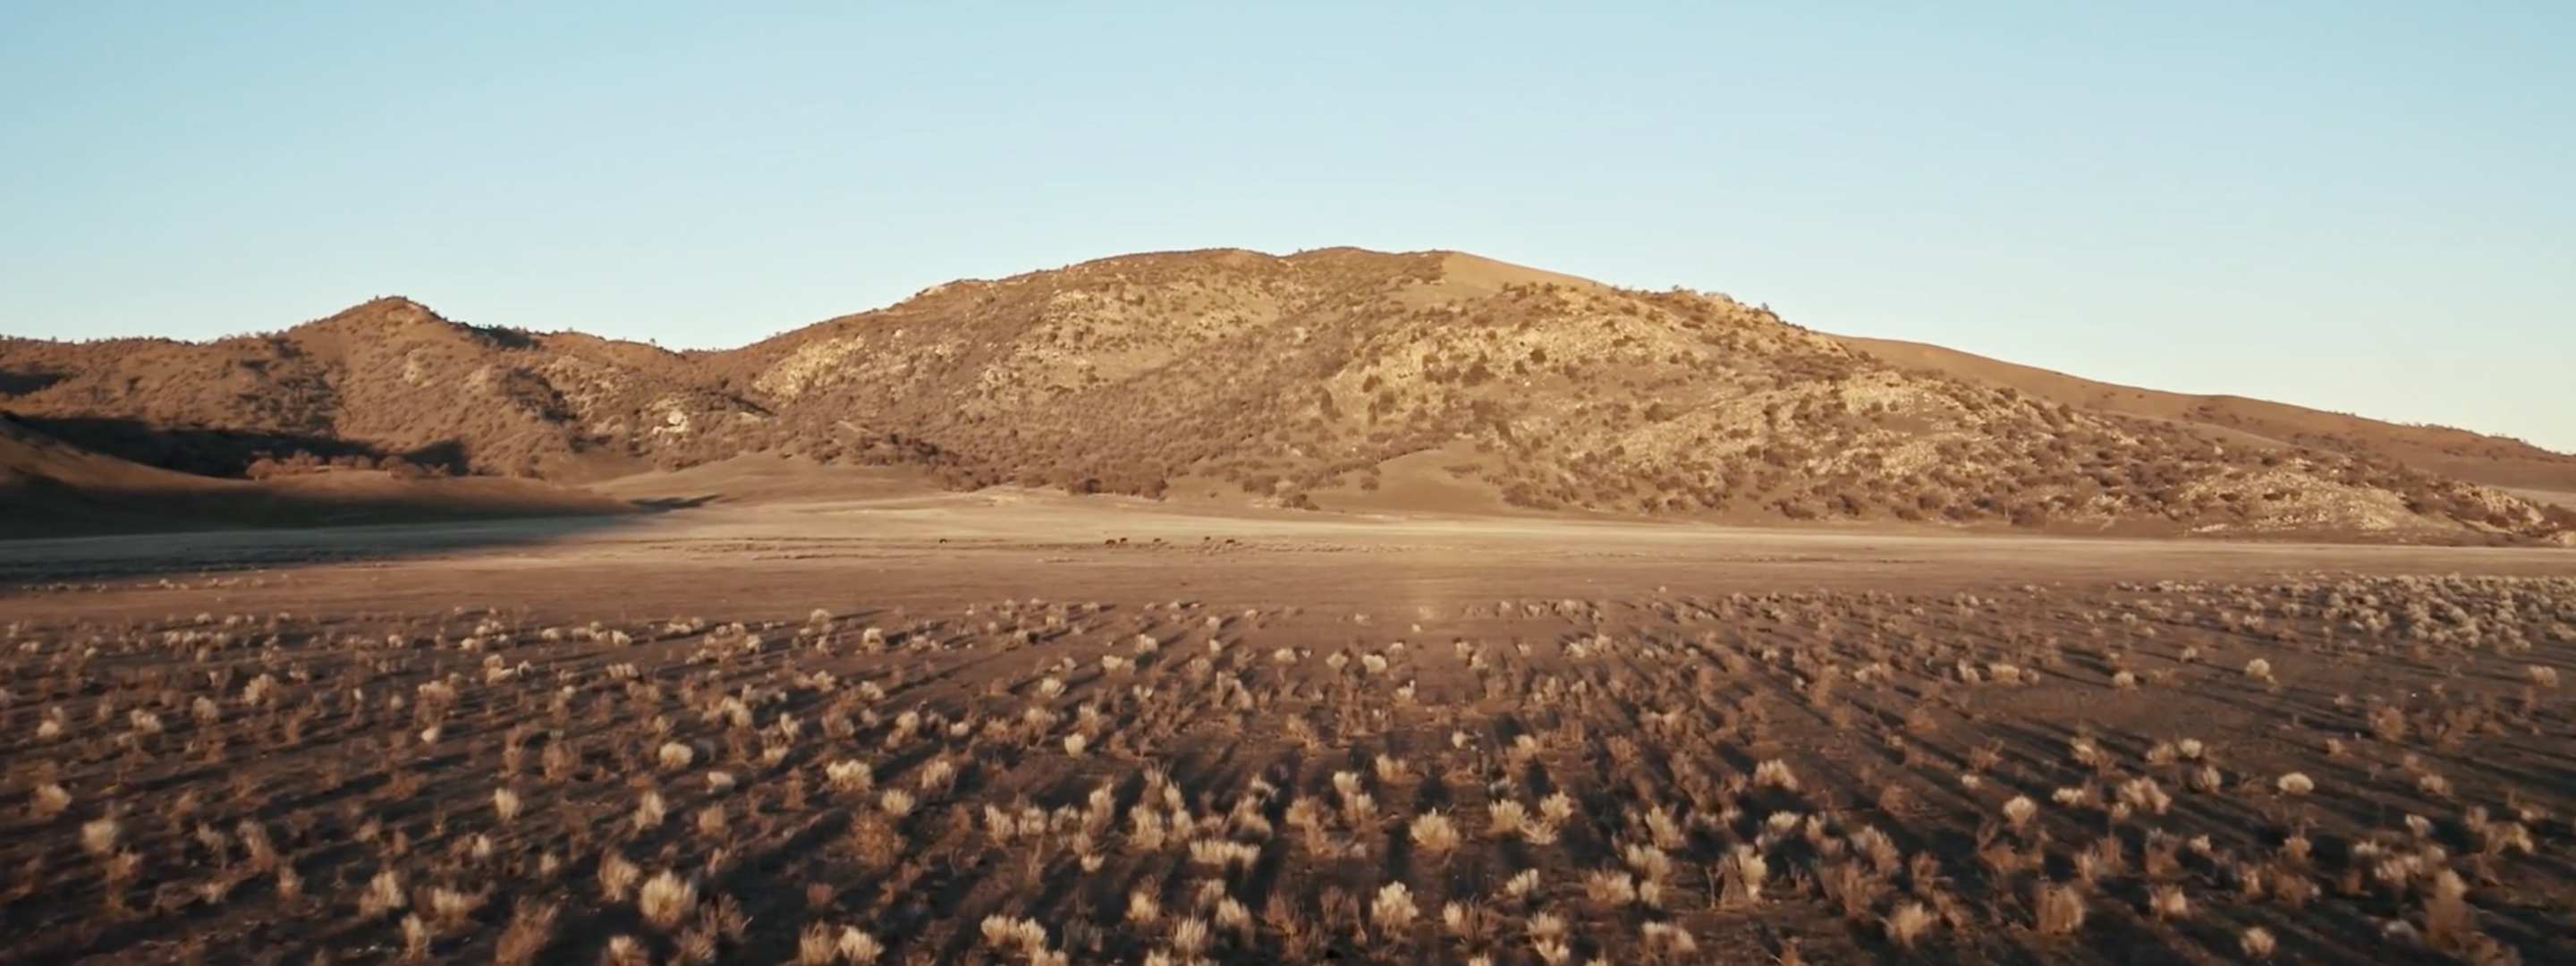 <a href="https://www.capgemini.com/news/inside-stories/mojave-desert/"></a><a href="https://www.capgemini.com/news/inside-stories/mojave-desert/"><a href="https://www.capgemini.com/de-de/news/inside-stories/mojave-desert/">Mojave Desert</a></a>